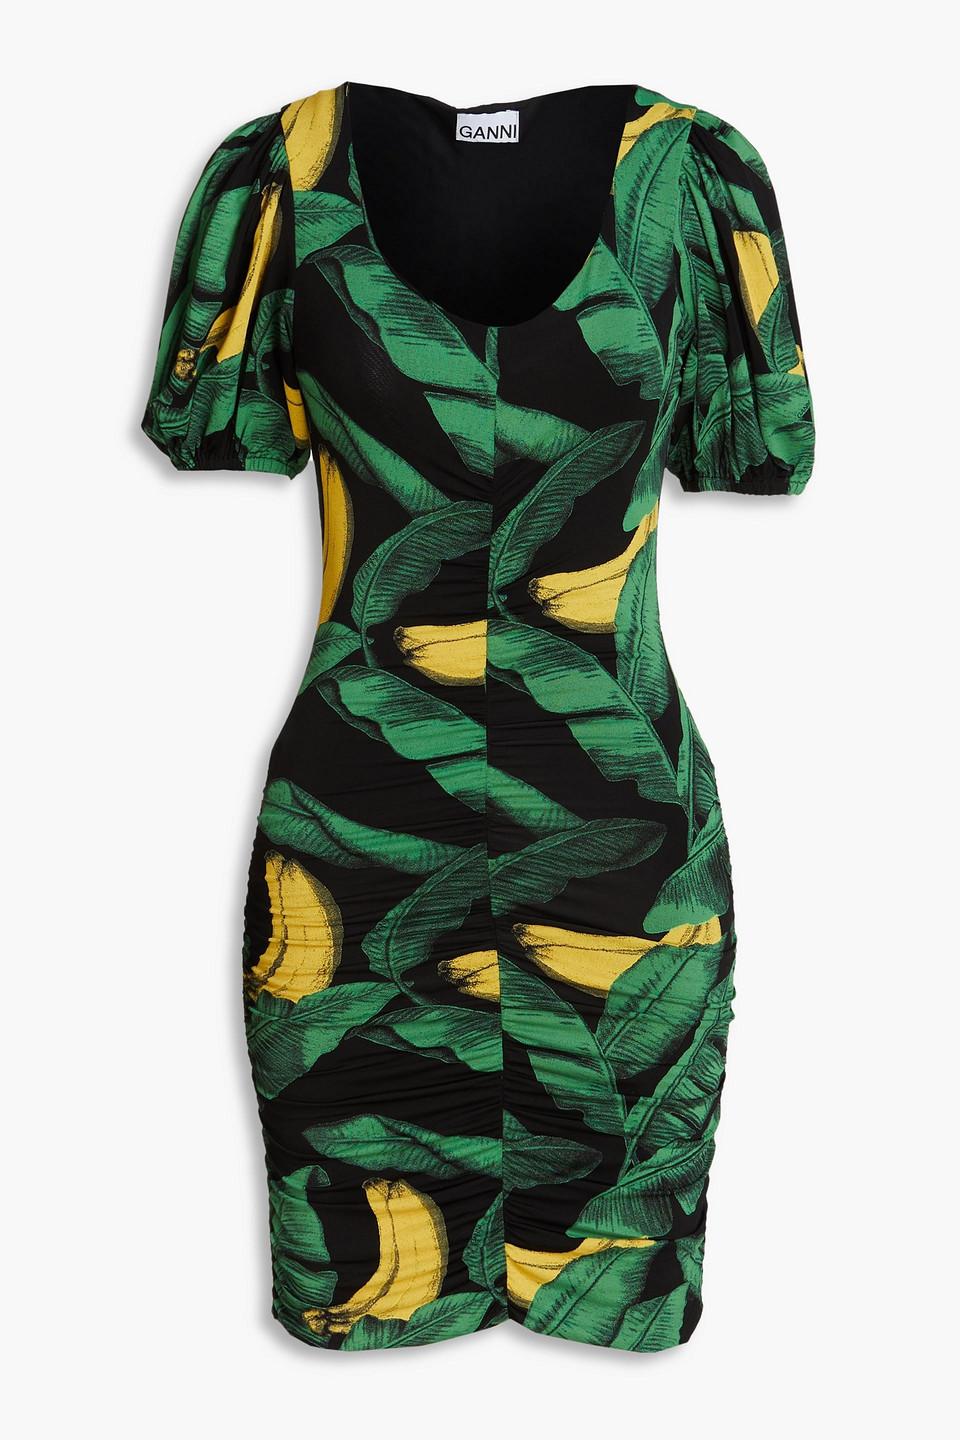 Ganni Ruched Floral-print Stretch-jersey Mini Dress in Green | Lyst